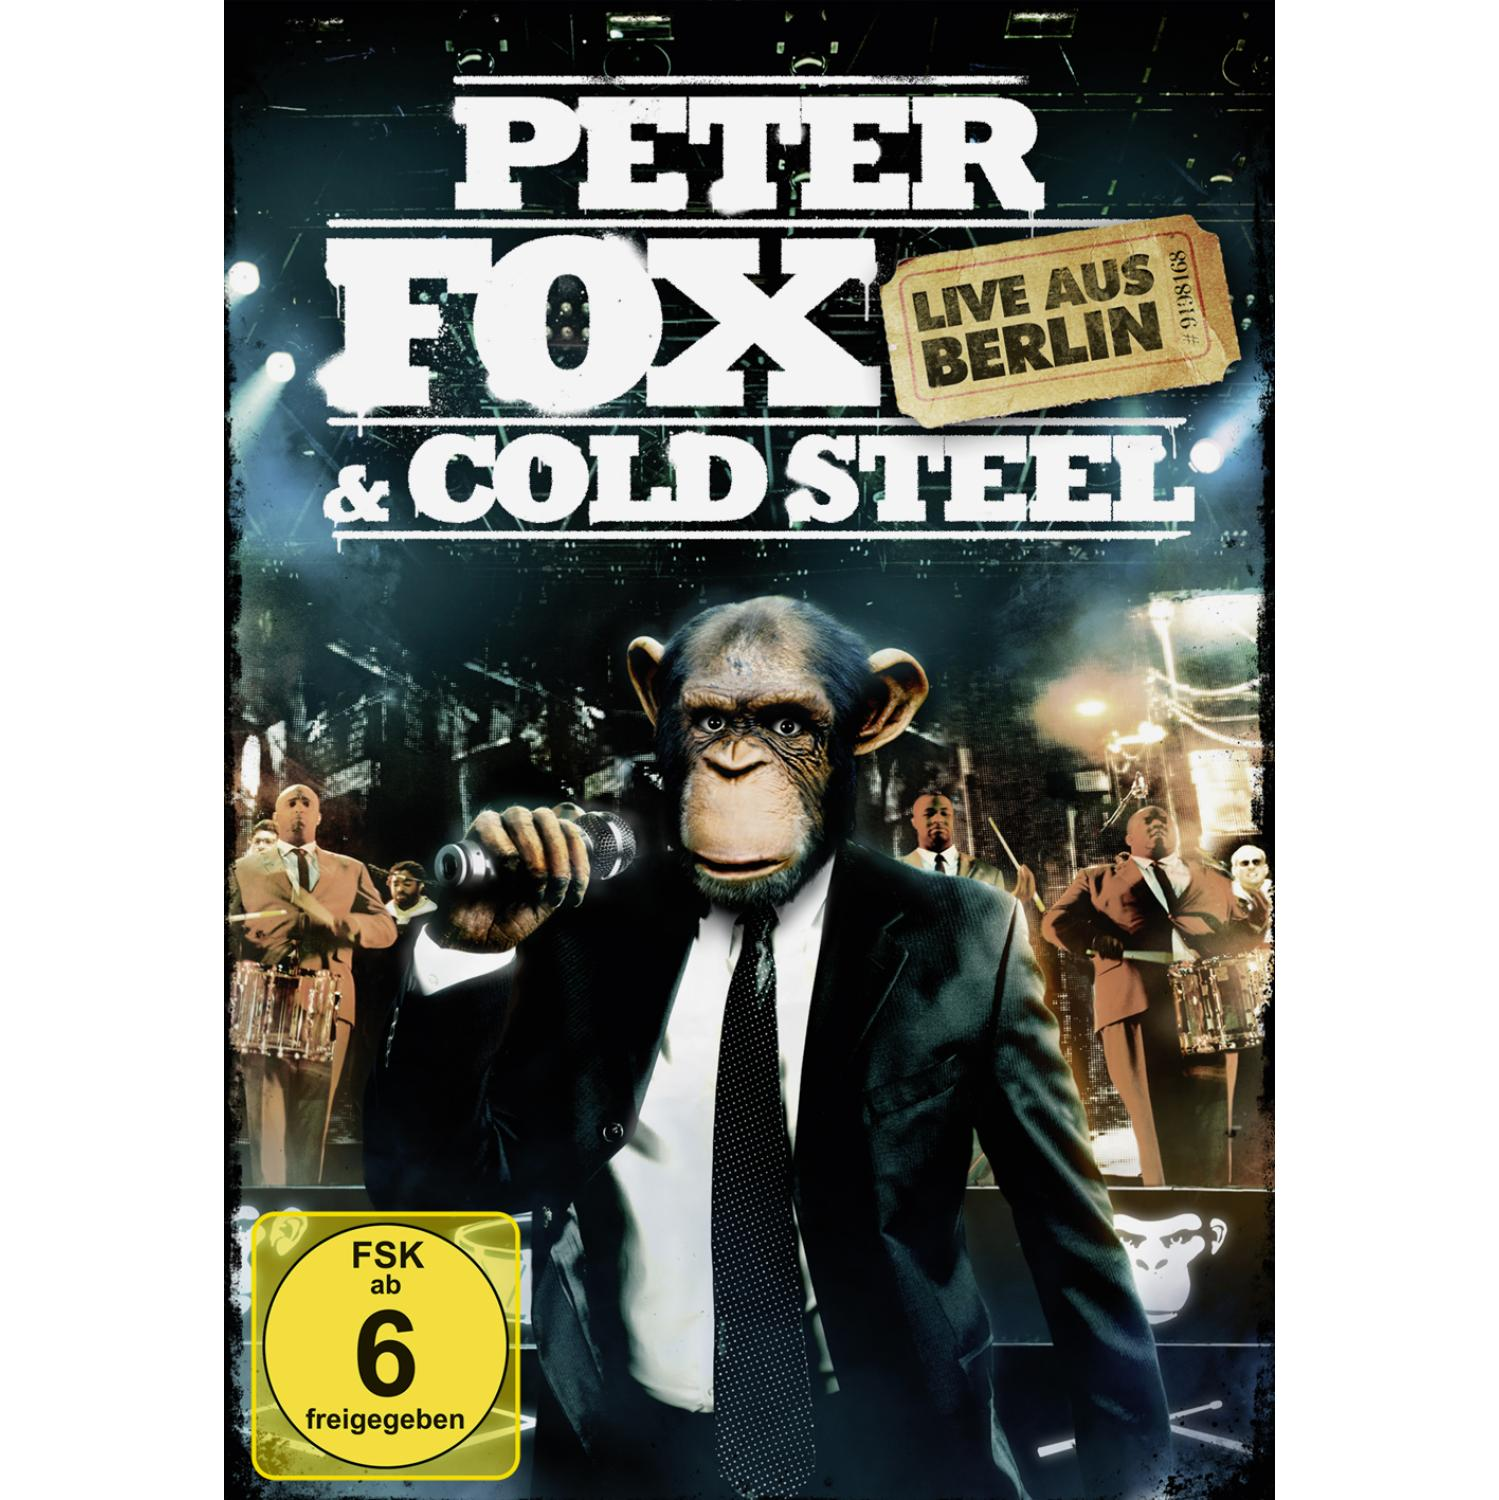 Steel Fox - (DVD) Cold aus Peter Live - & Berlin